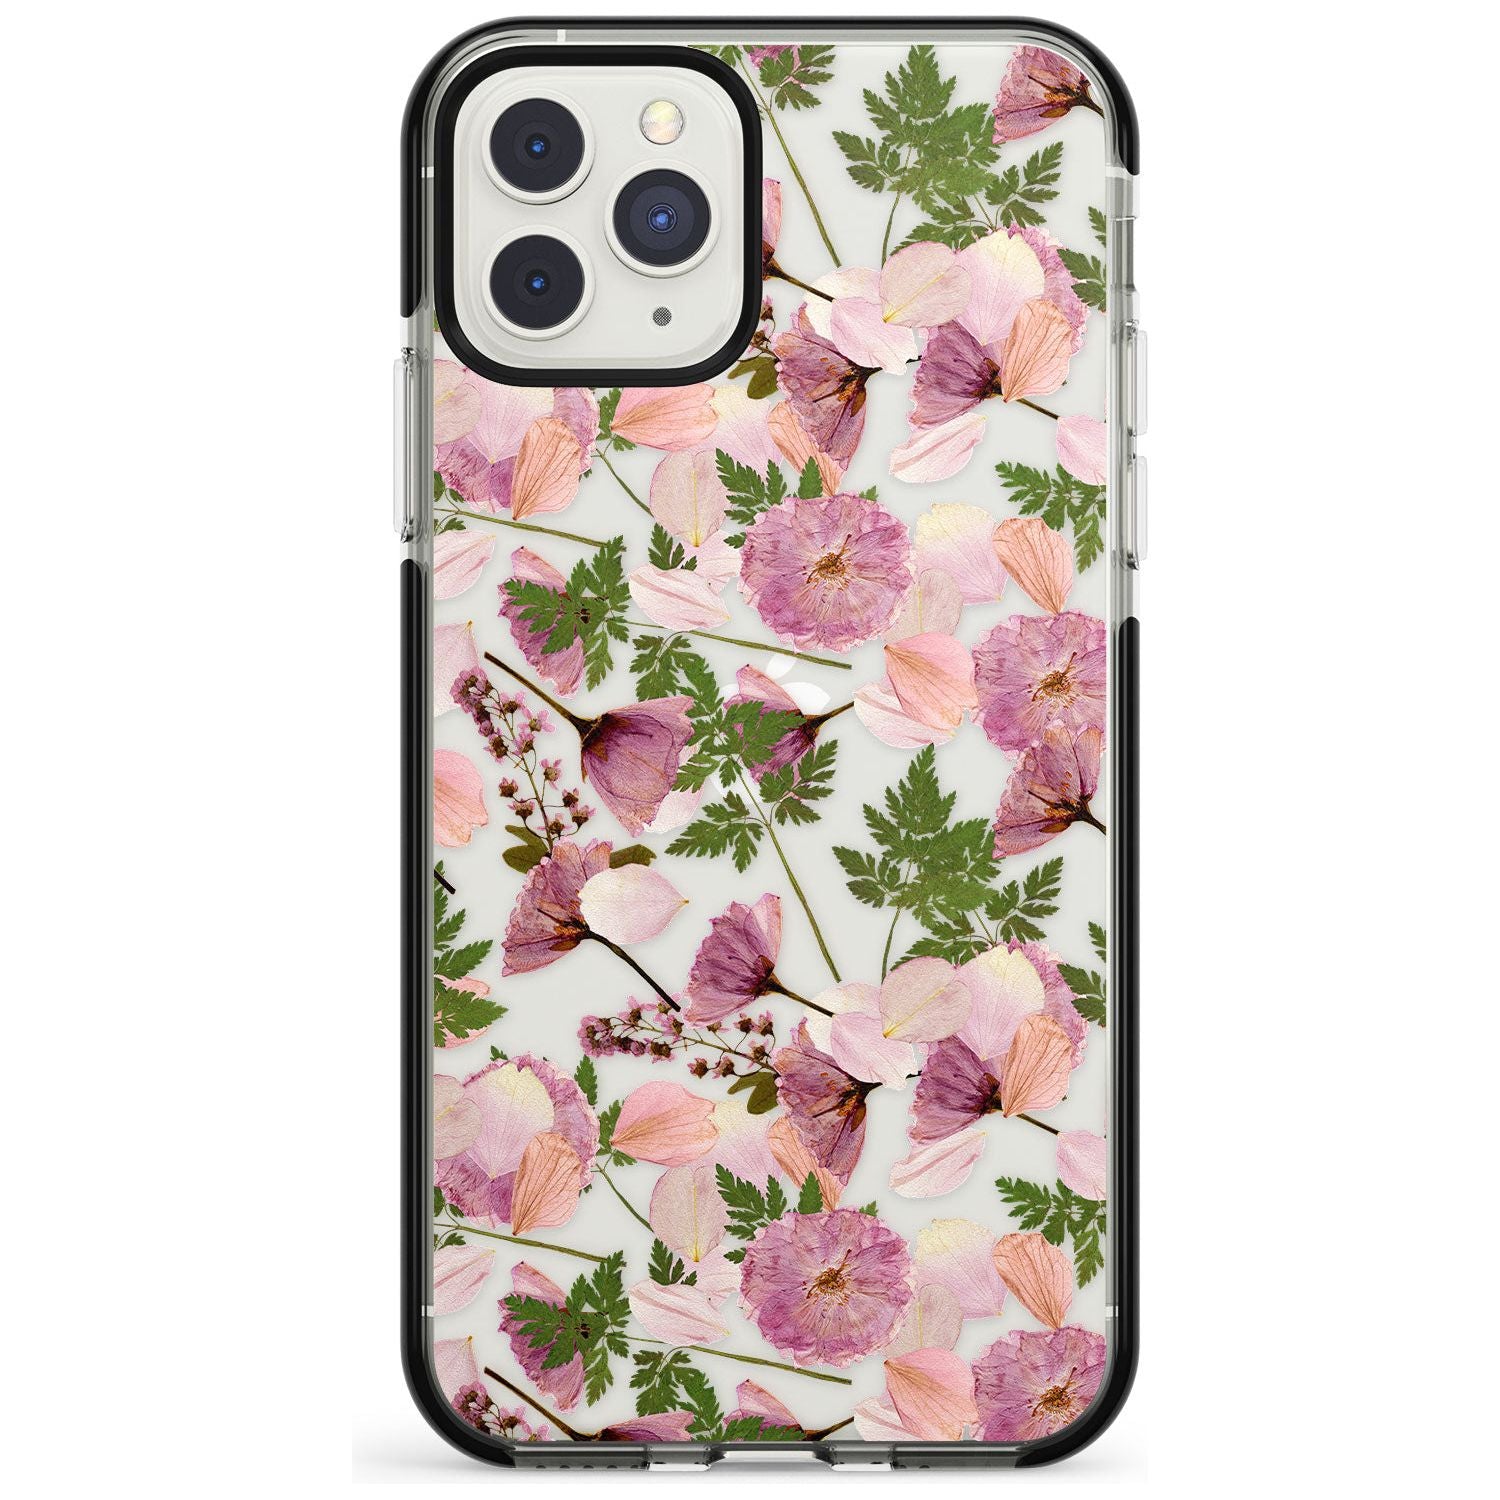 Leafy Floral Pattern Transparent Design Black Impact Phone Case for iPhone 11 Pro Max